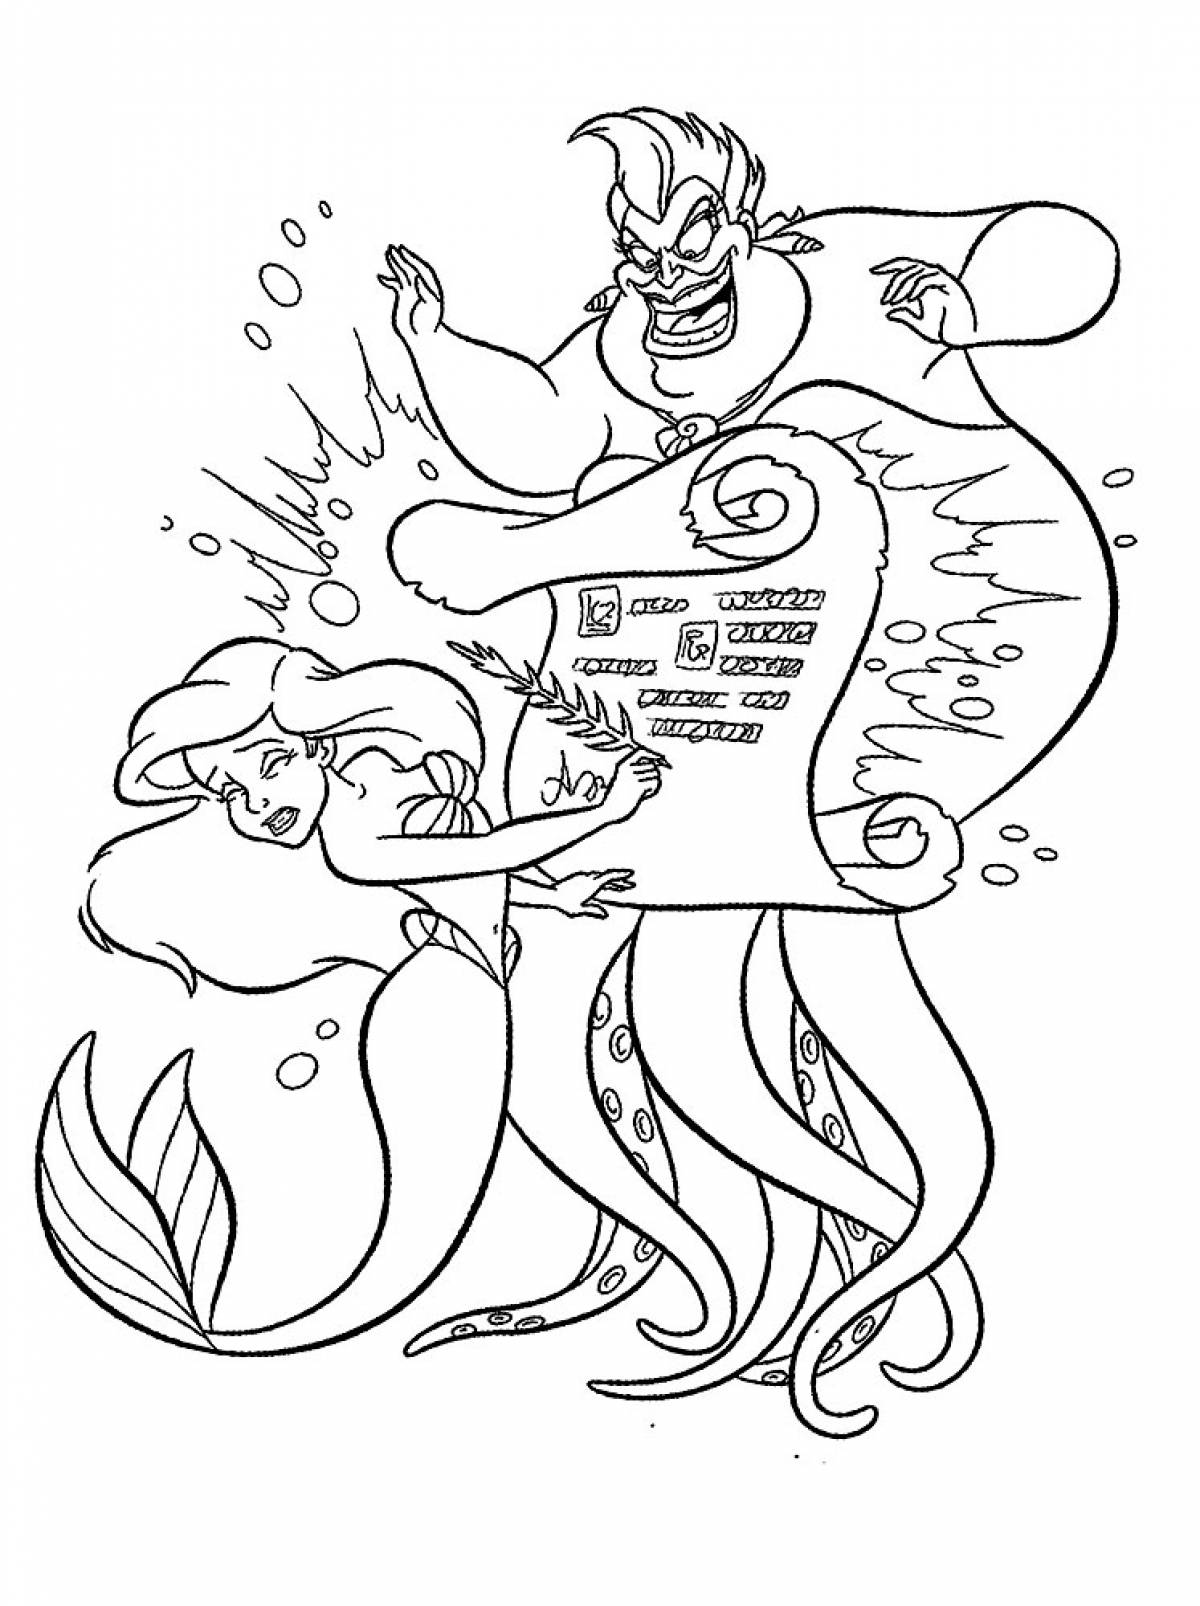 Ariel and Ursula coloring book